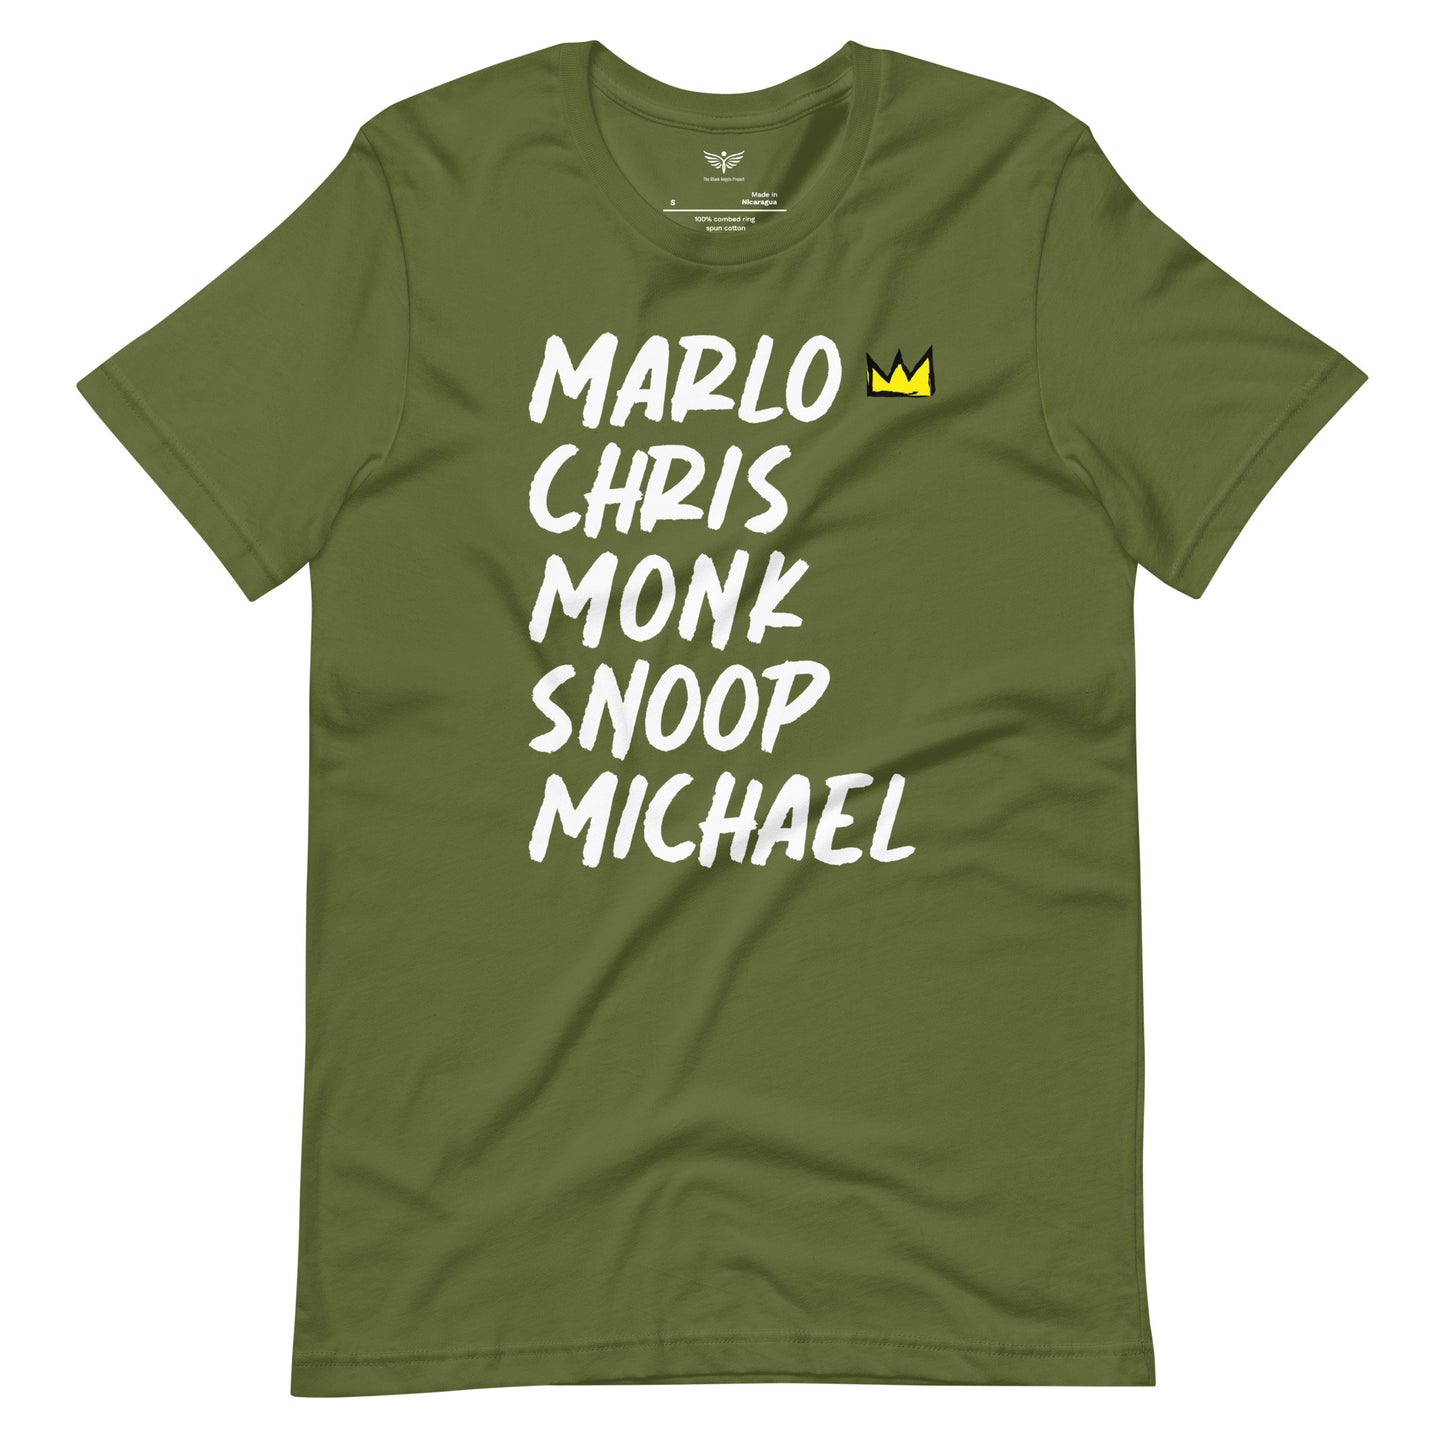 MARLO CHRIS MONK SNOOP MICHAEL - Unisex t-shirt